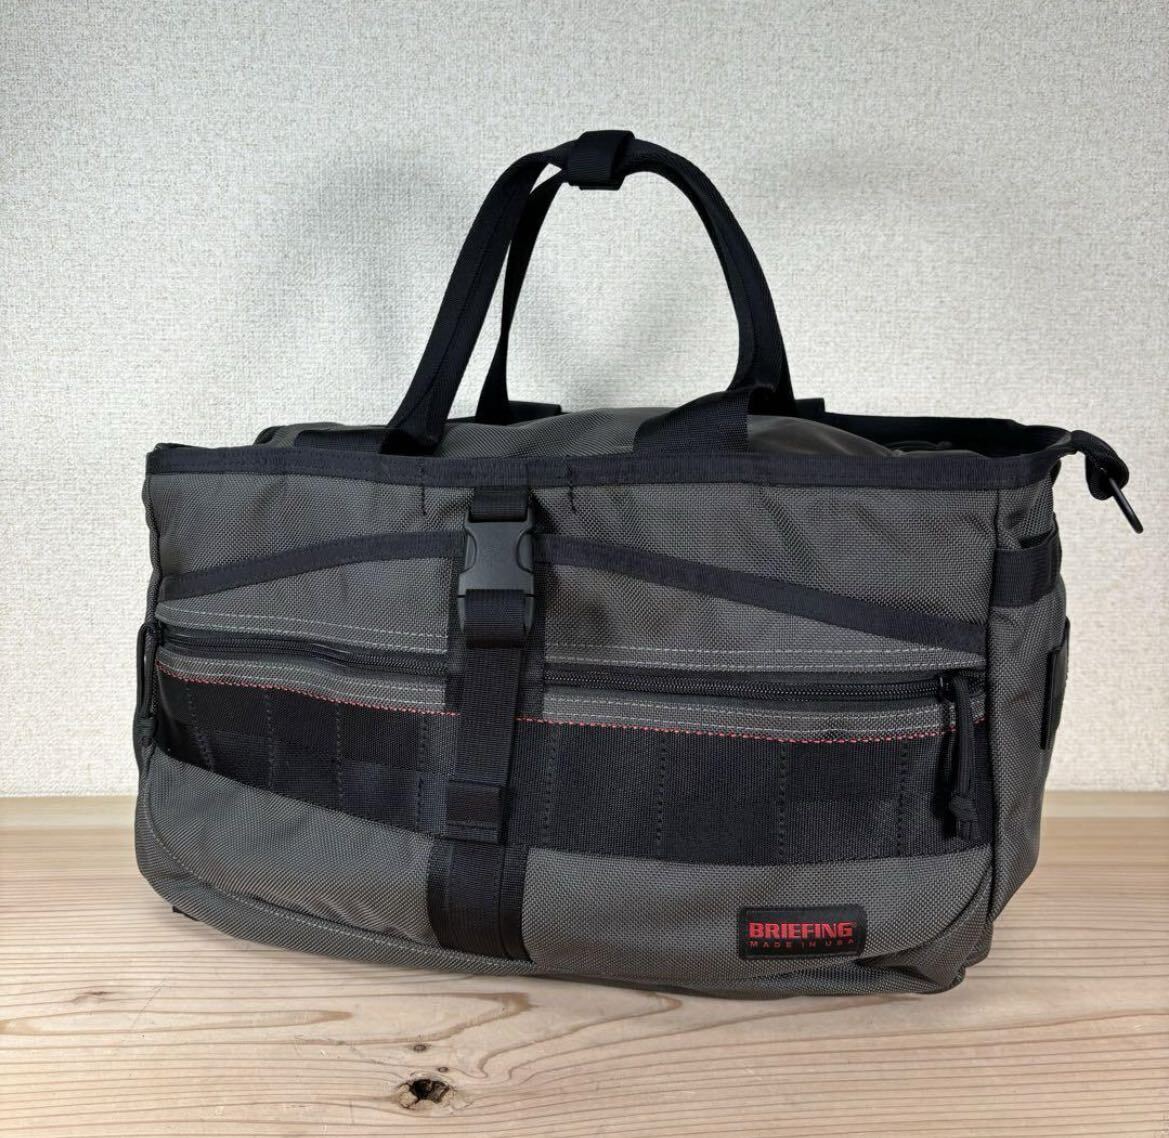 1 jpy ultimate beautiful goods Briefing BRIEFING tote bag Jim bag k loud Easy wire shoes storage 24L Golf bag gray 7651